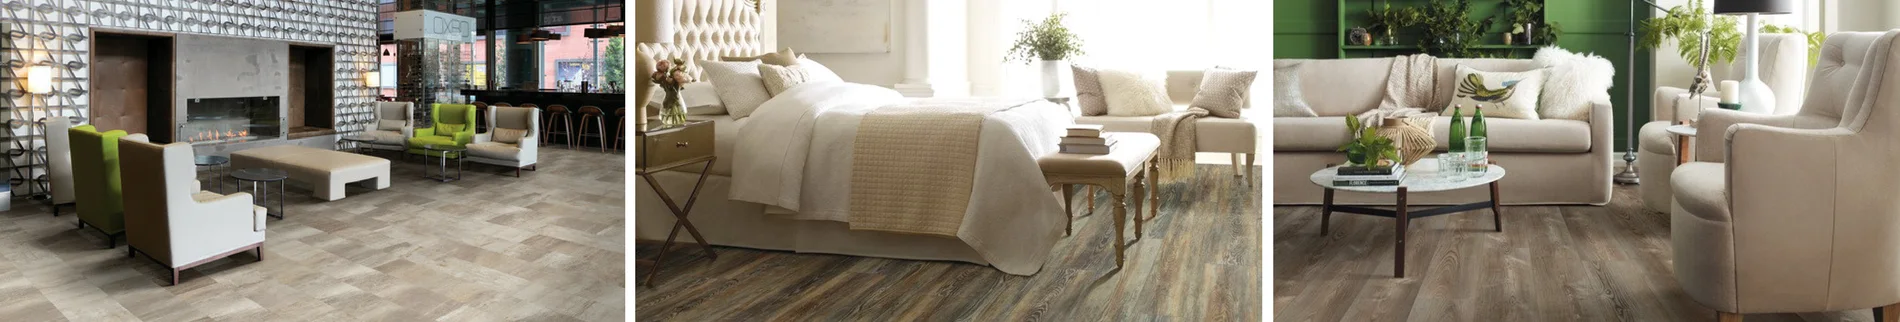  vinyl-plank-flooring with modern furniture.